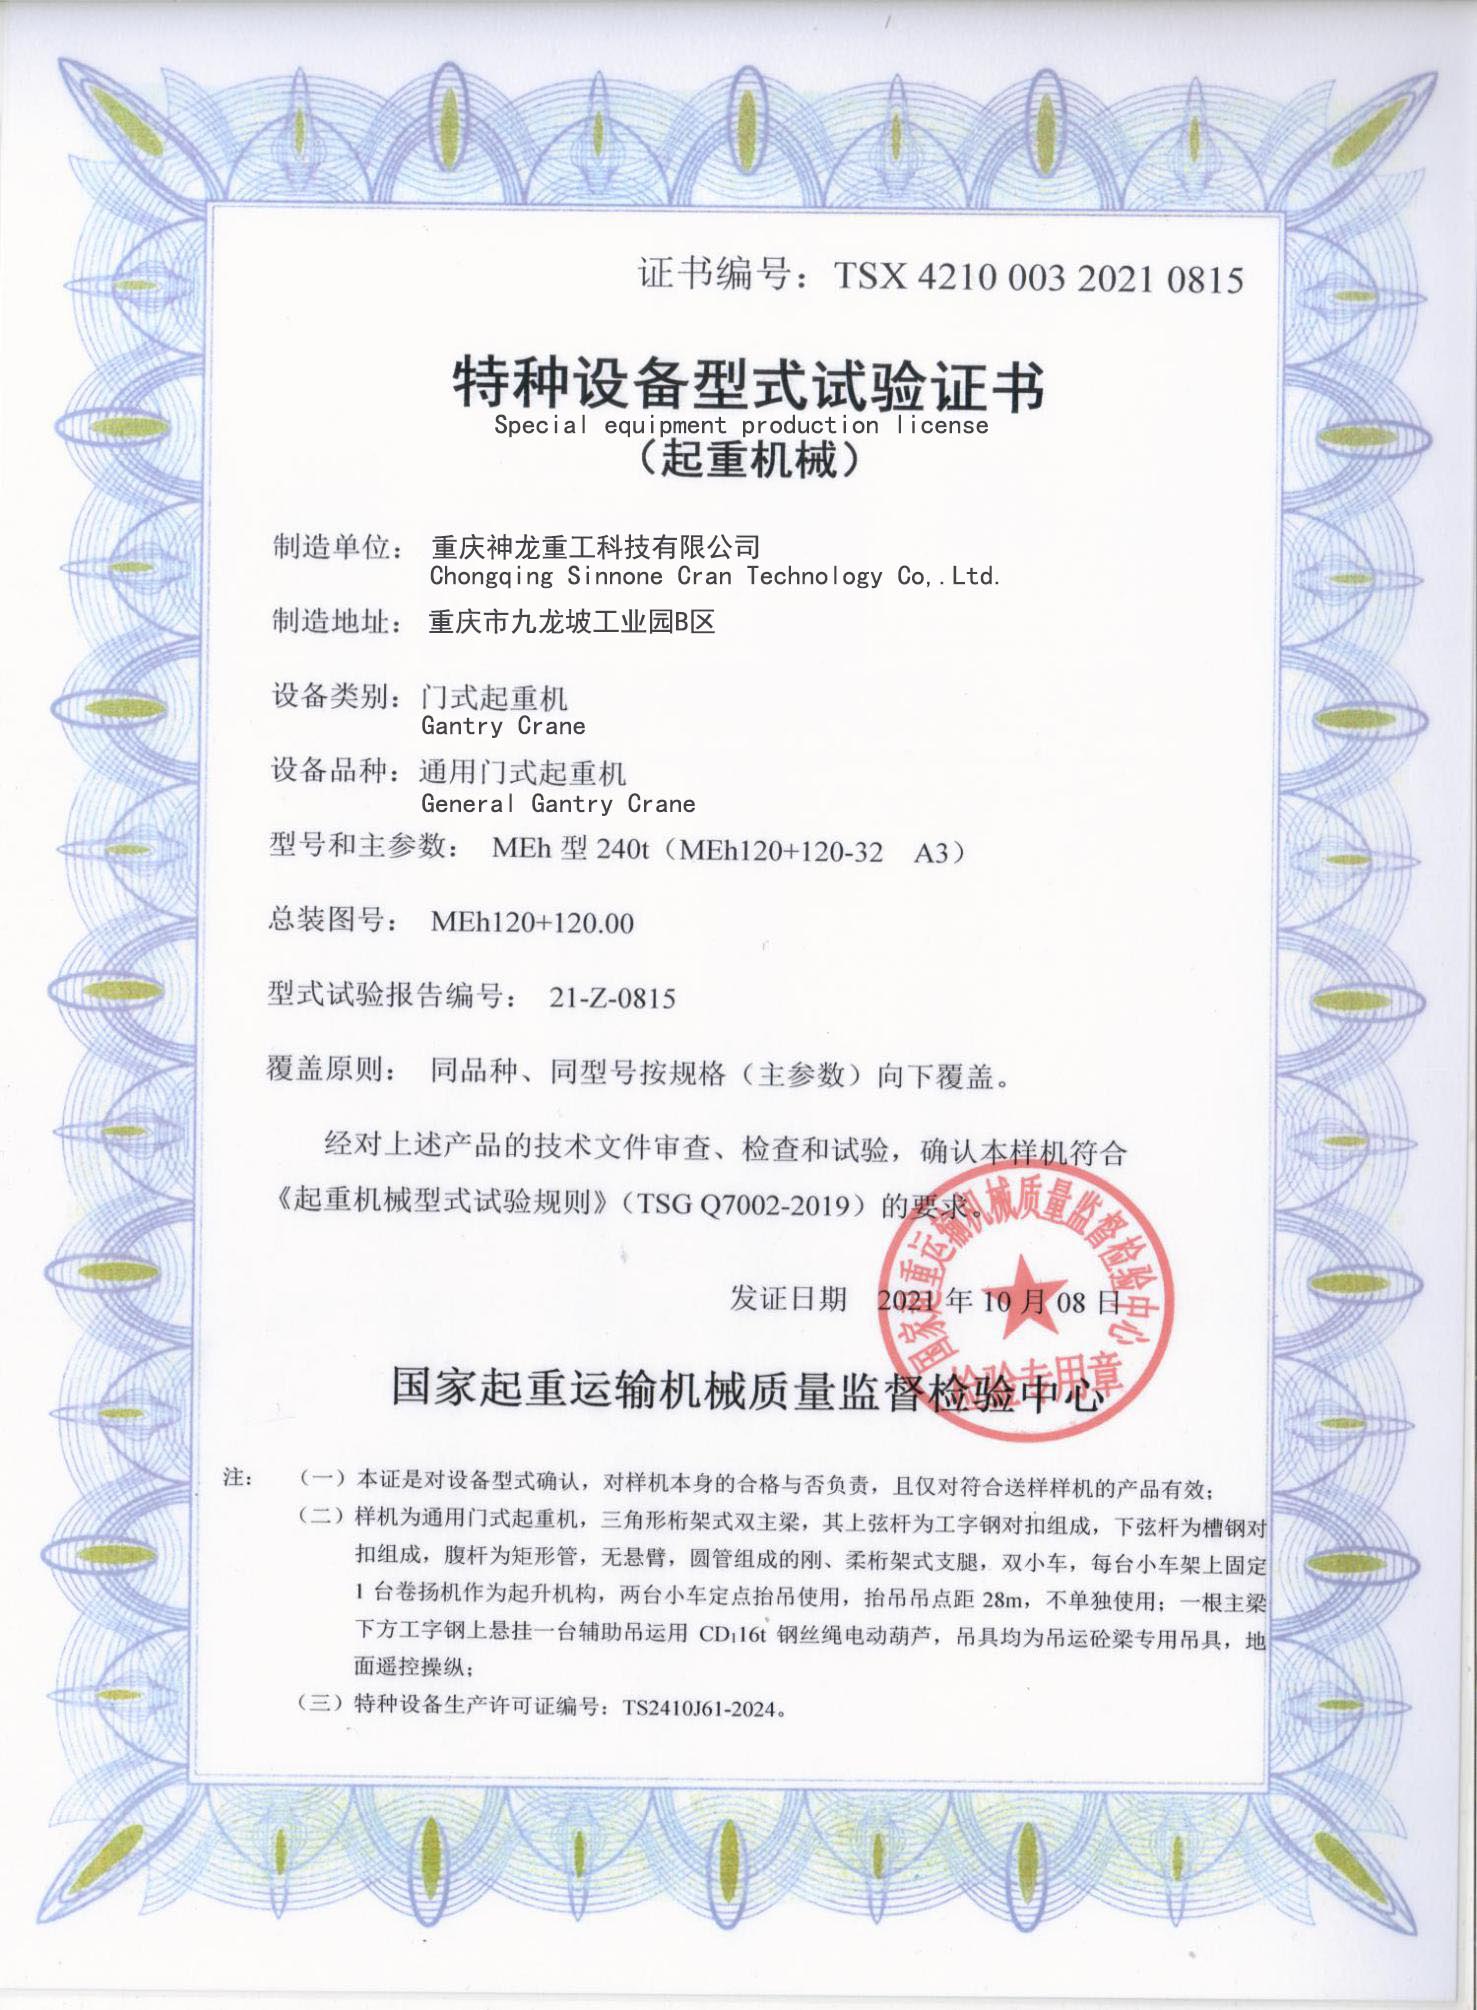 Special equipment production license-Gantry crane